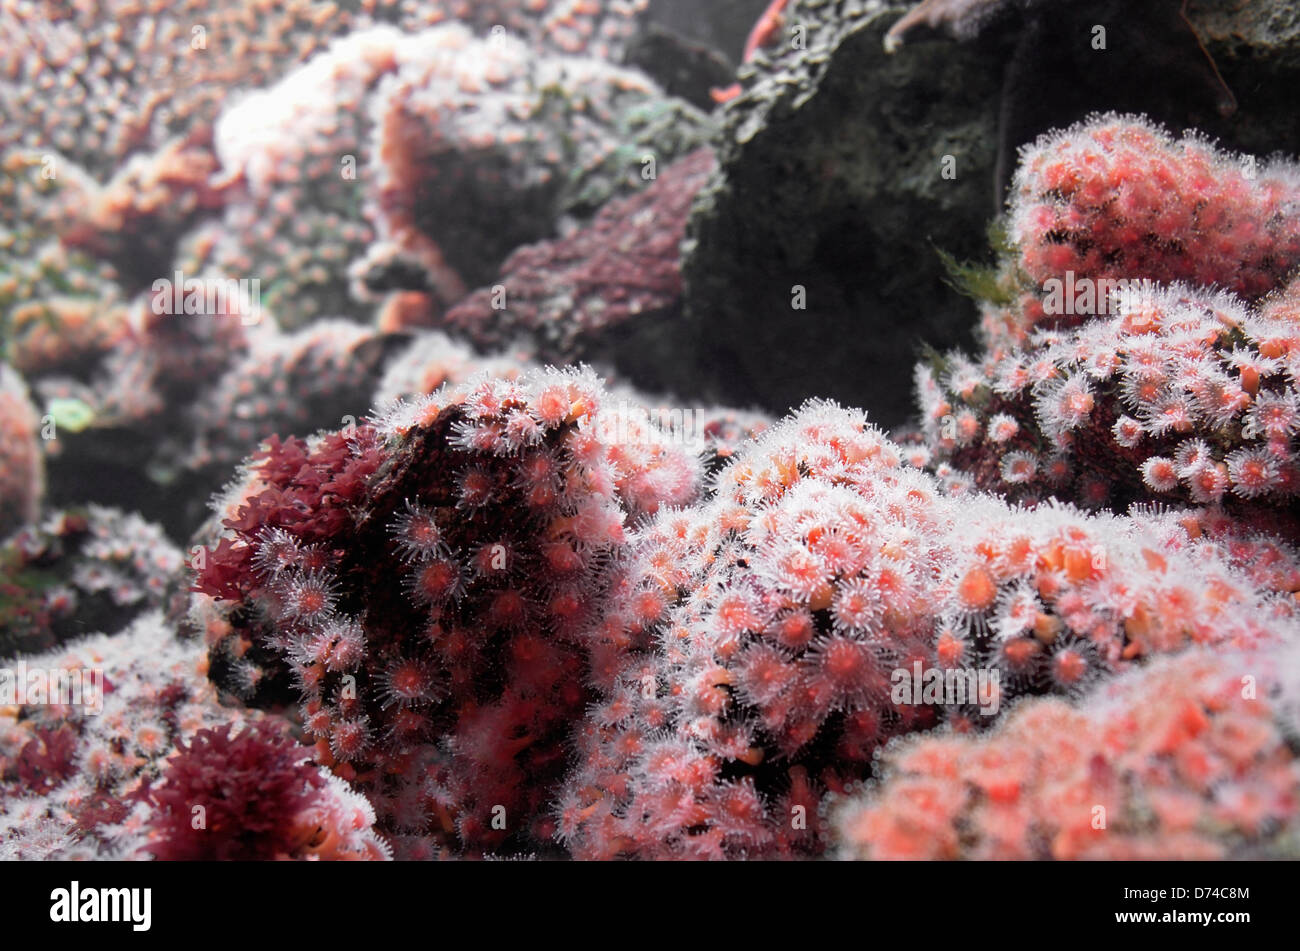 underwater scenery with lots of sea anemones Stock Photo